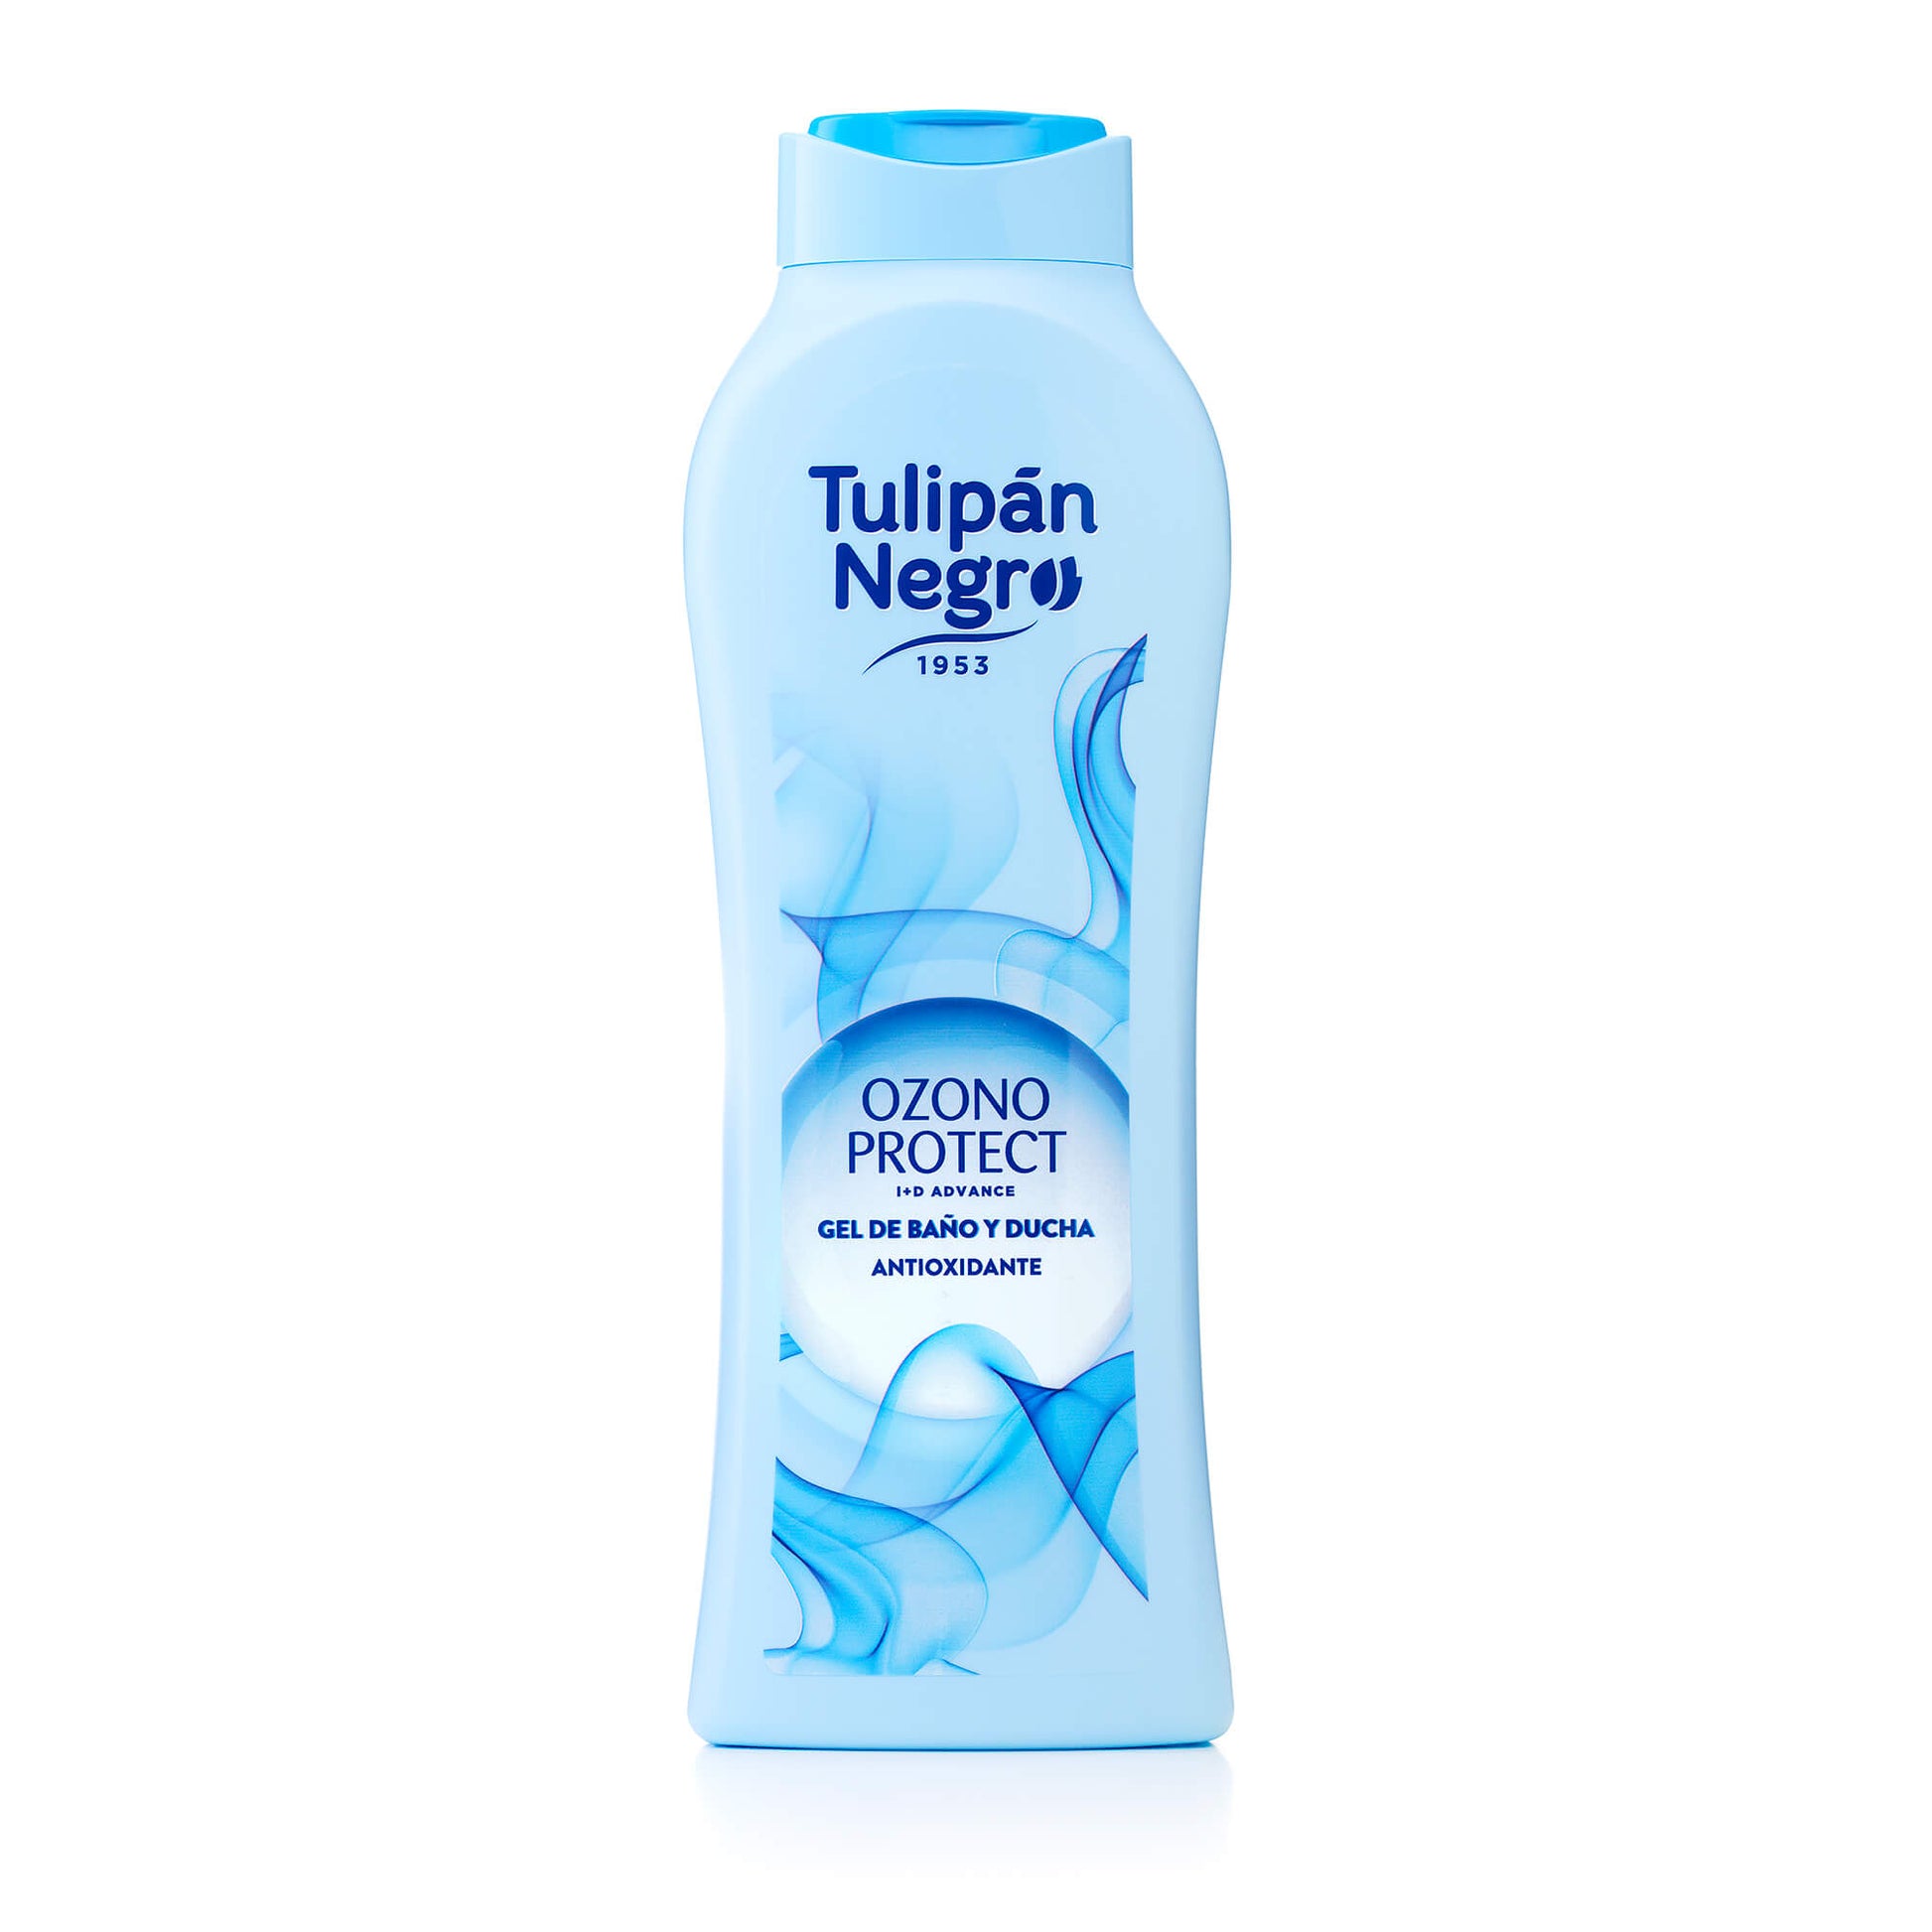 Tulipan Negro Deodorant Spray Cotton and Talc 200 ml – auracaremt